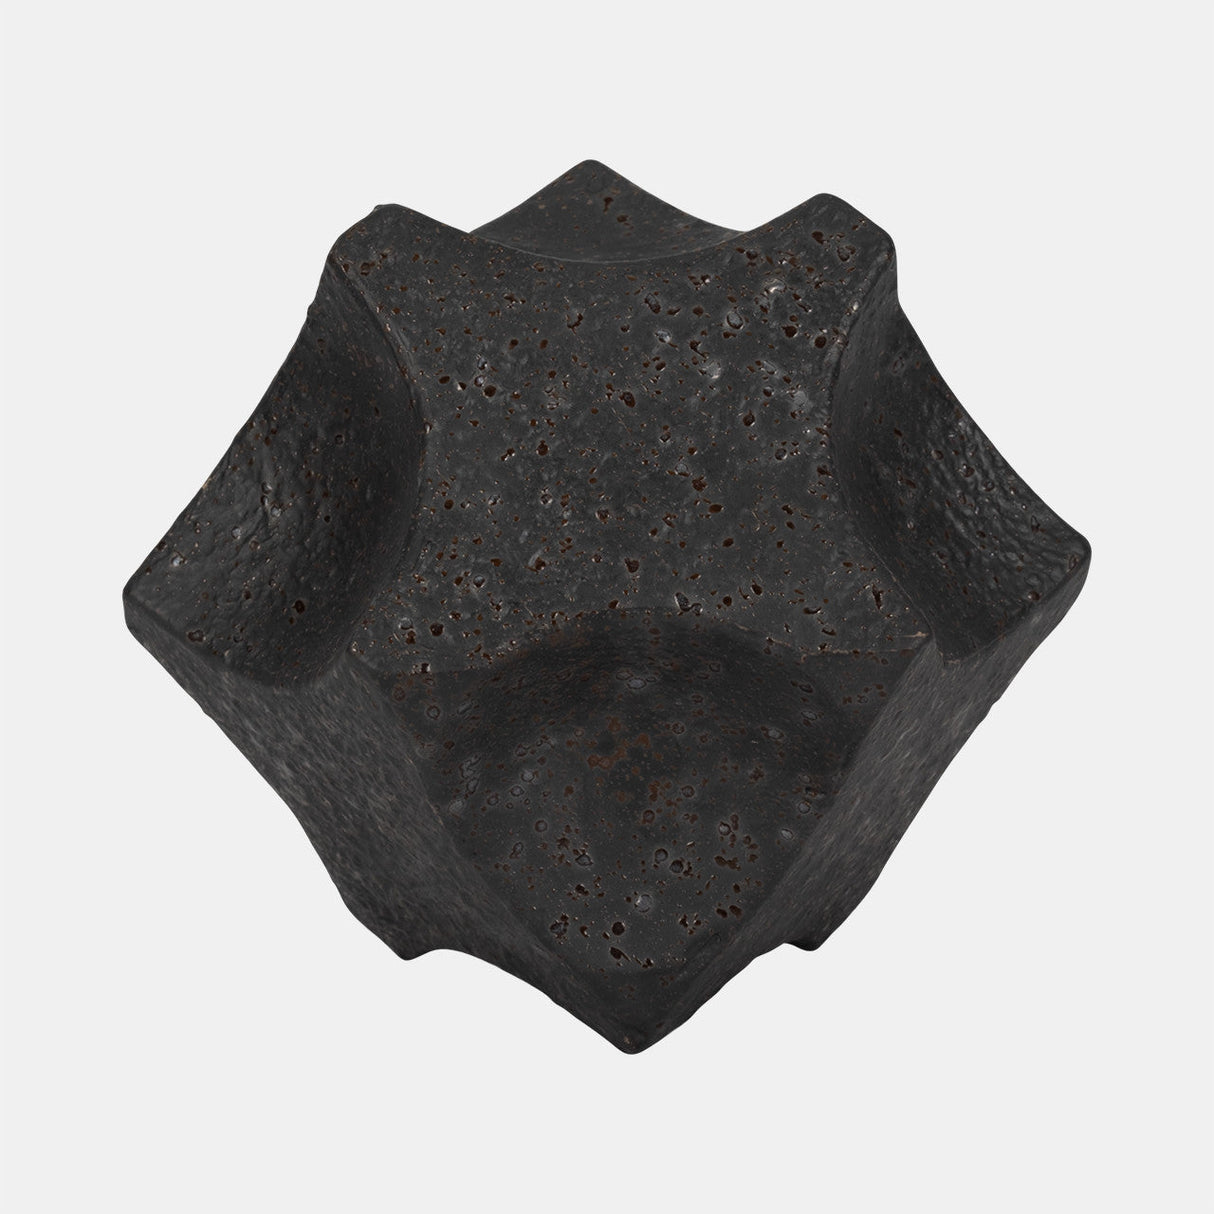 7" Textured Geometric Orb, Black